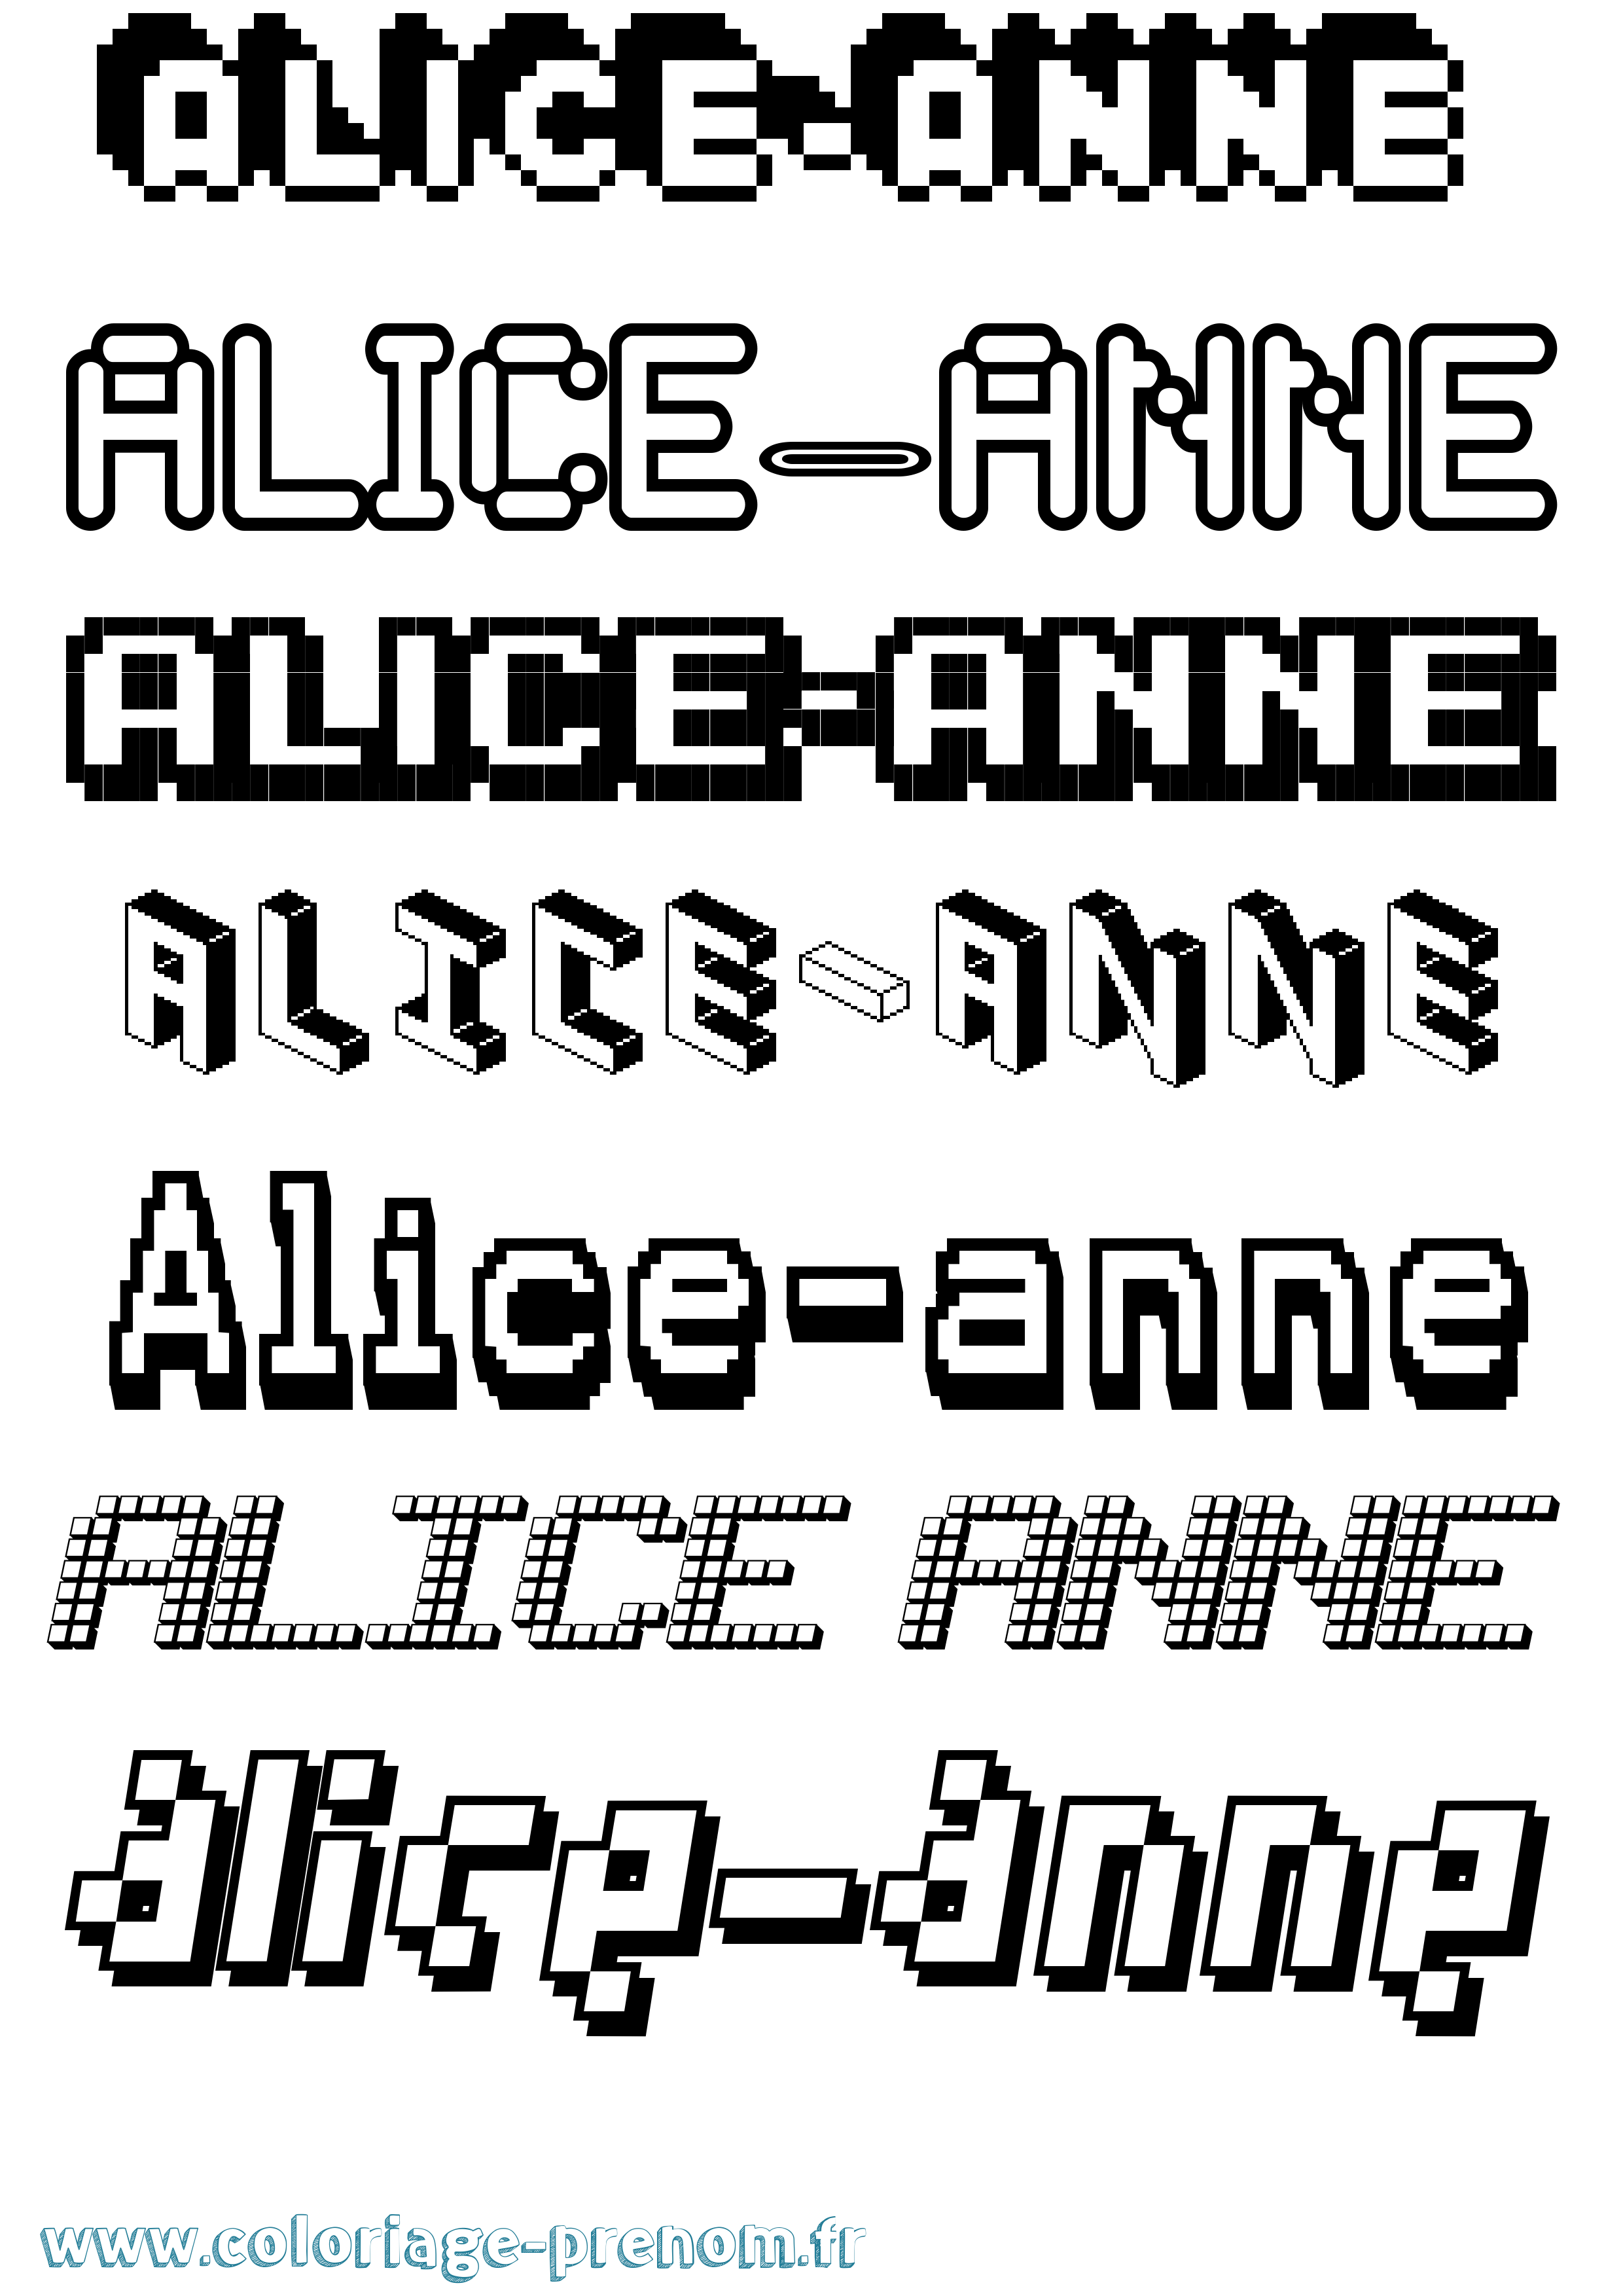 Coloriage prénom Alice-Anne Pixel